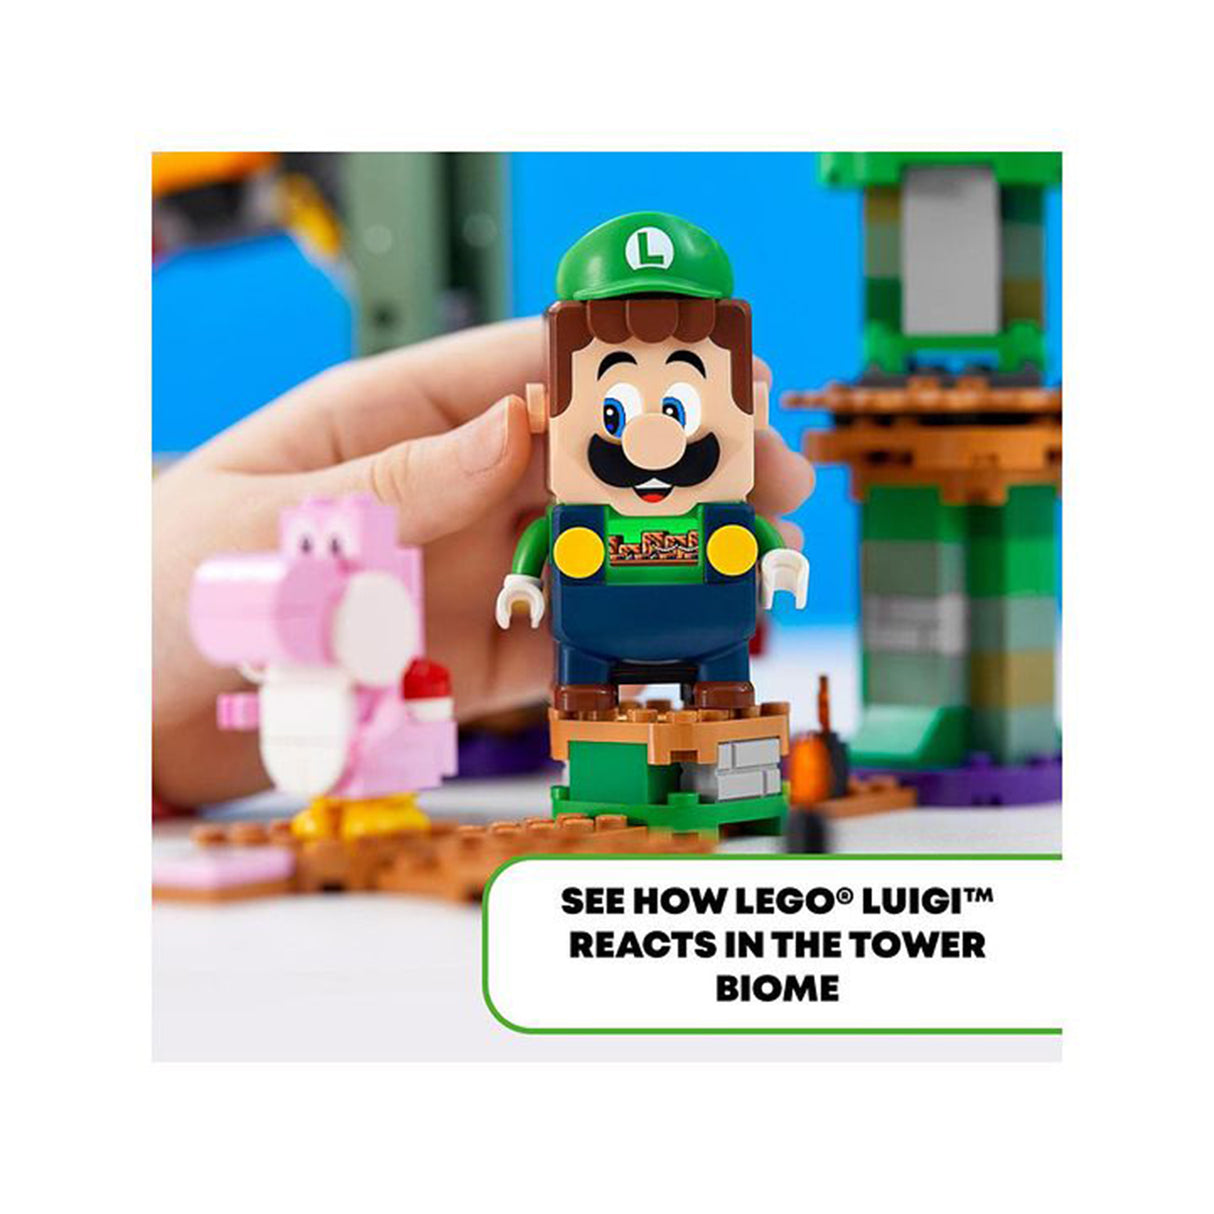 Adventures with Luigi Starter Course 71387